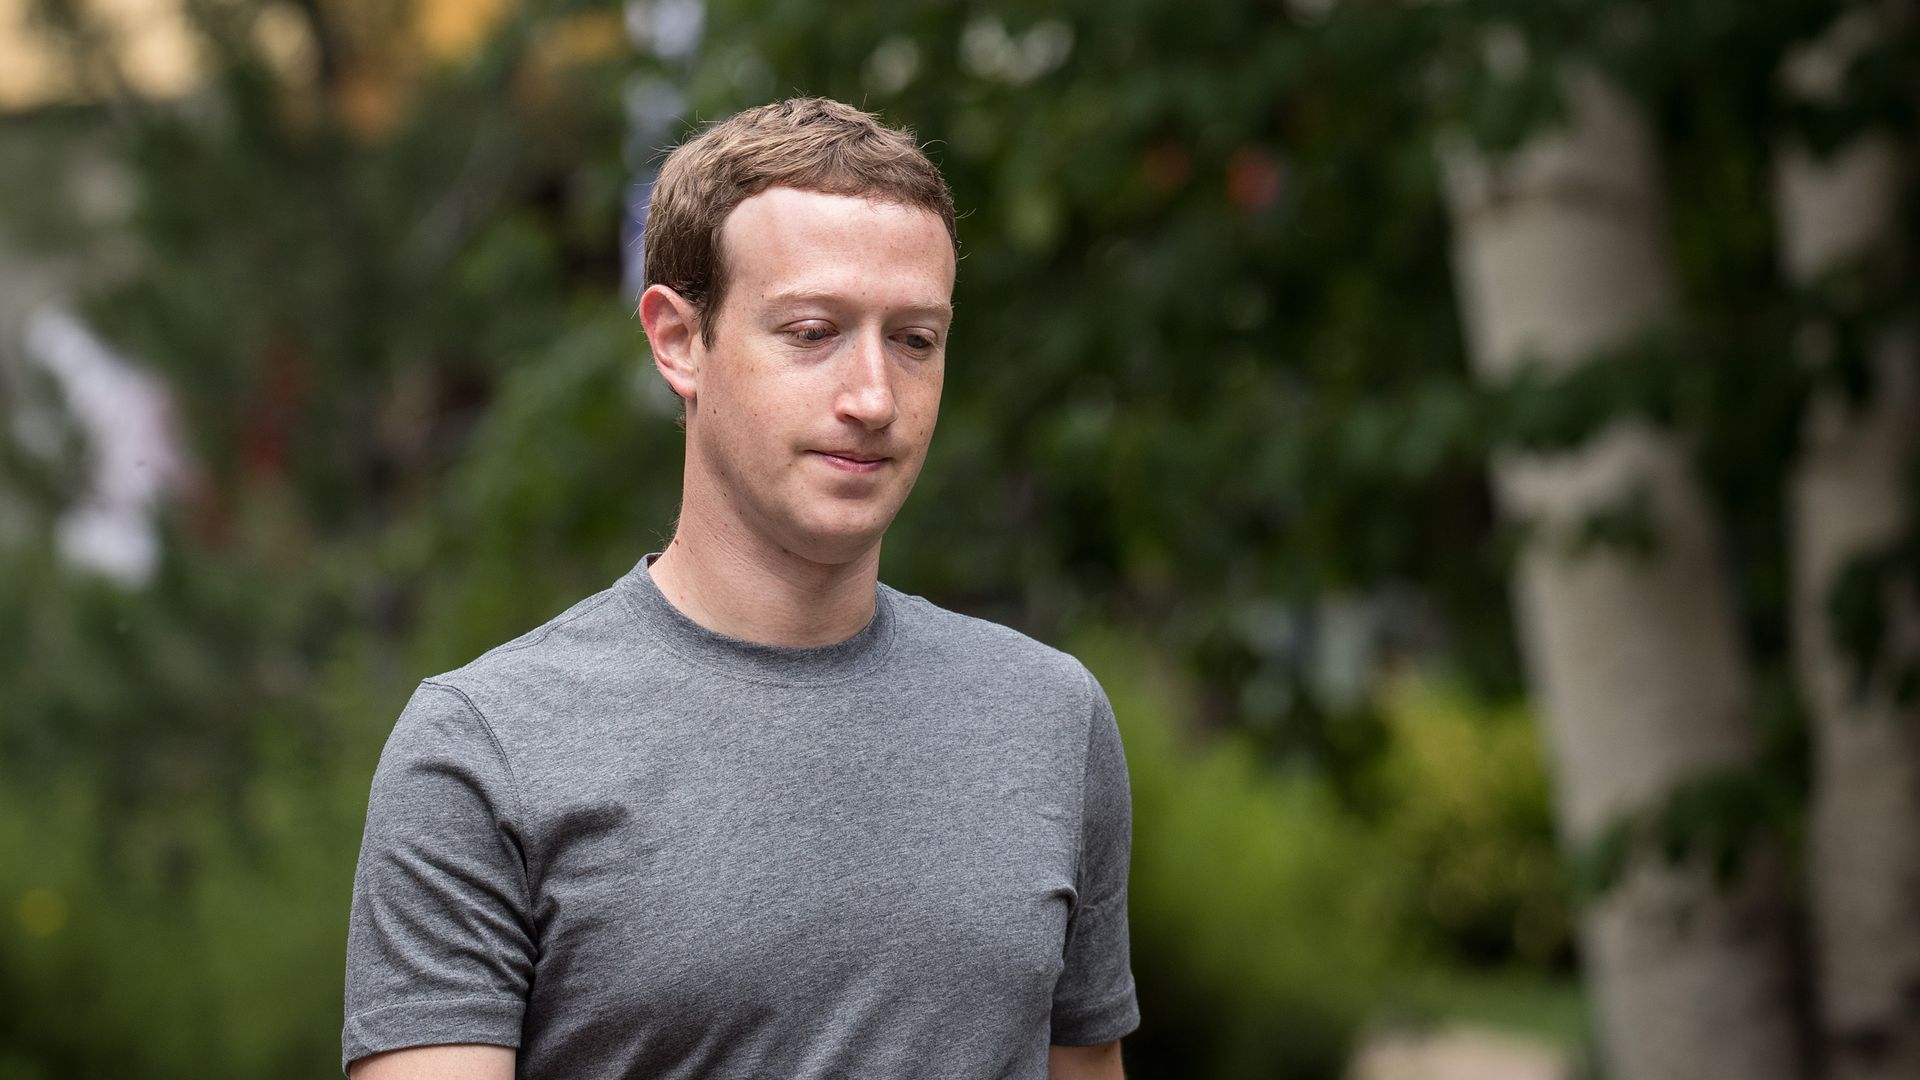 Facebook CEO Mark Zuckerberg walks with trees behind him